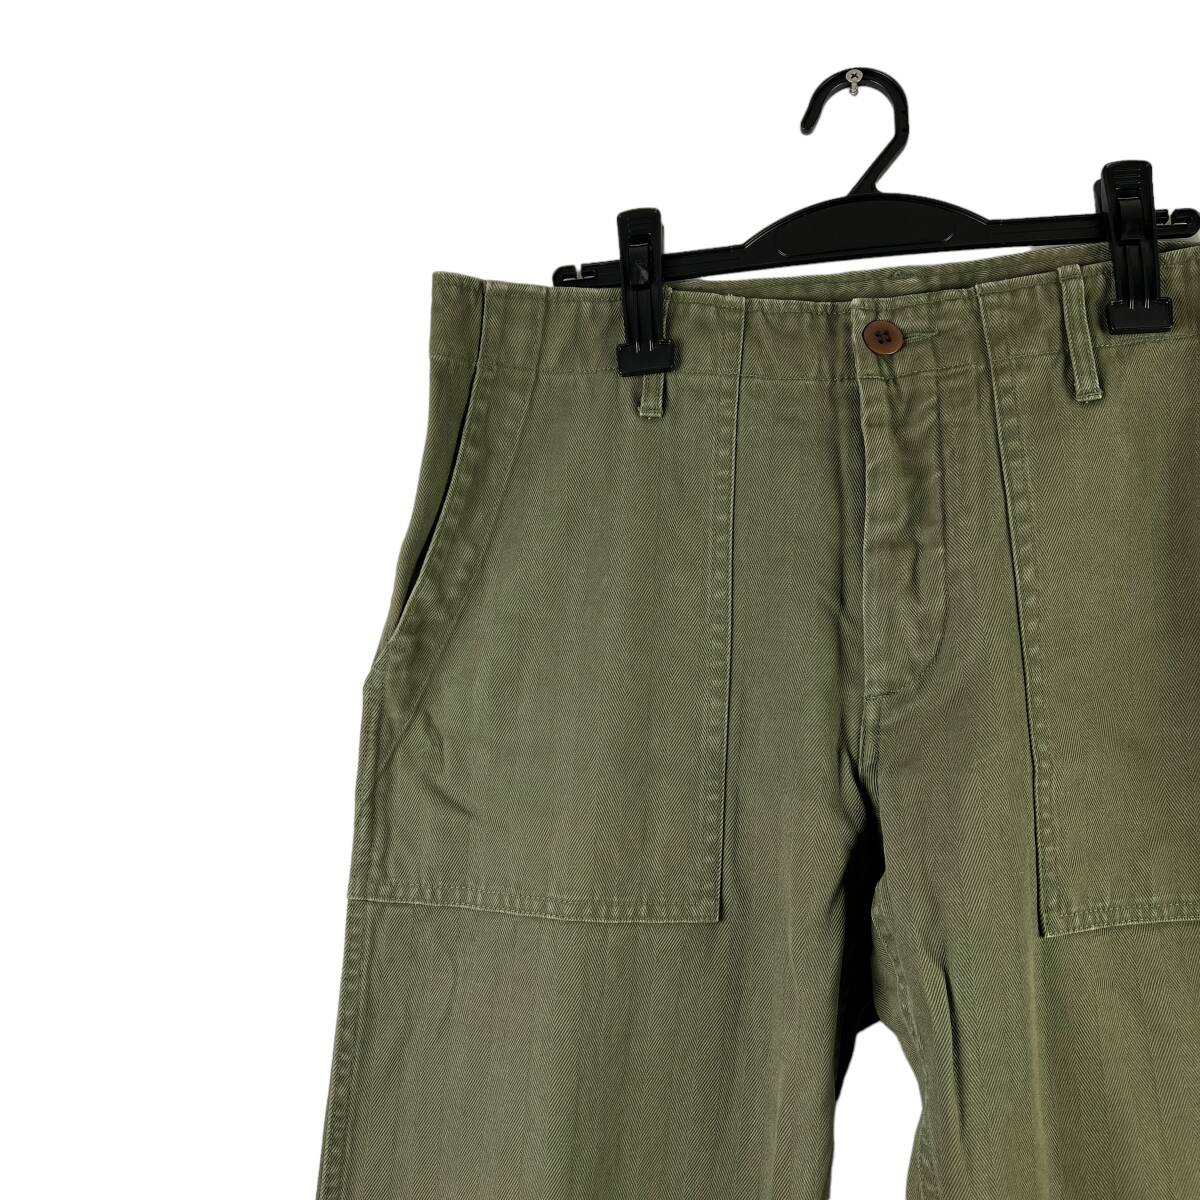 VISVIM(ビズビム) DRILL MIL PANTS HERRINGBONE Stripe Wide Pants (khaki)